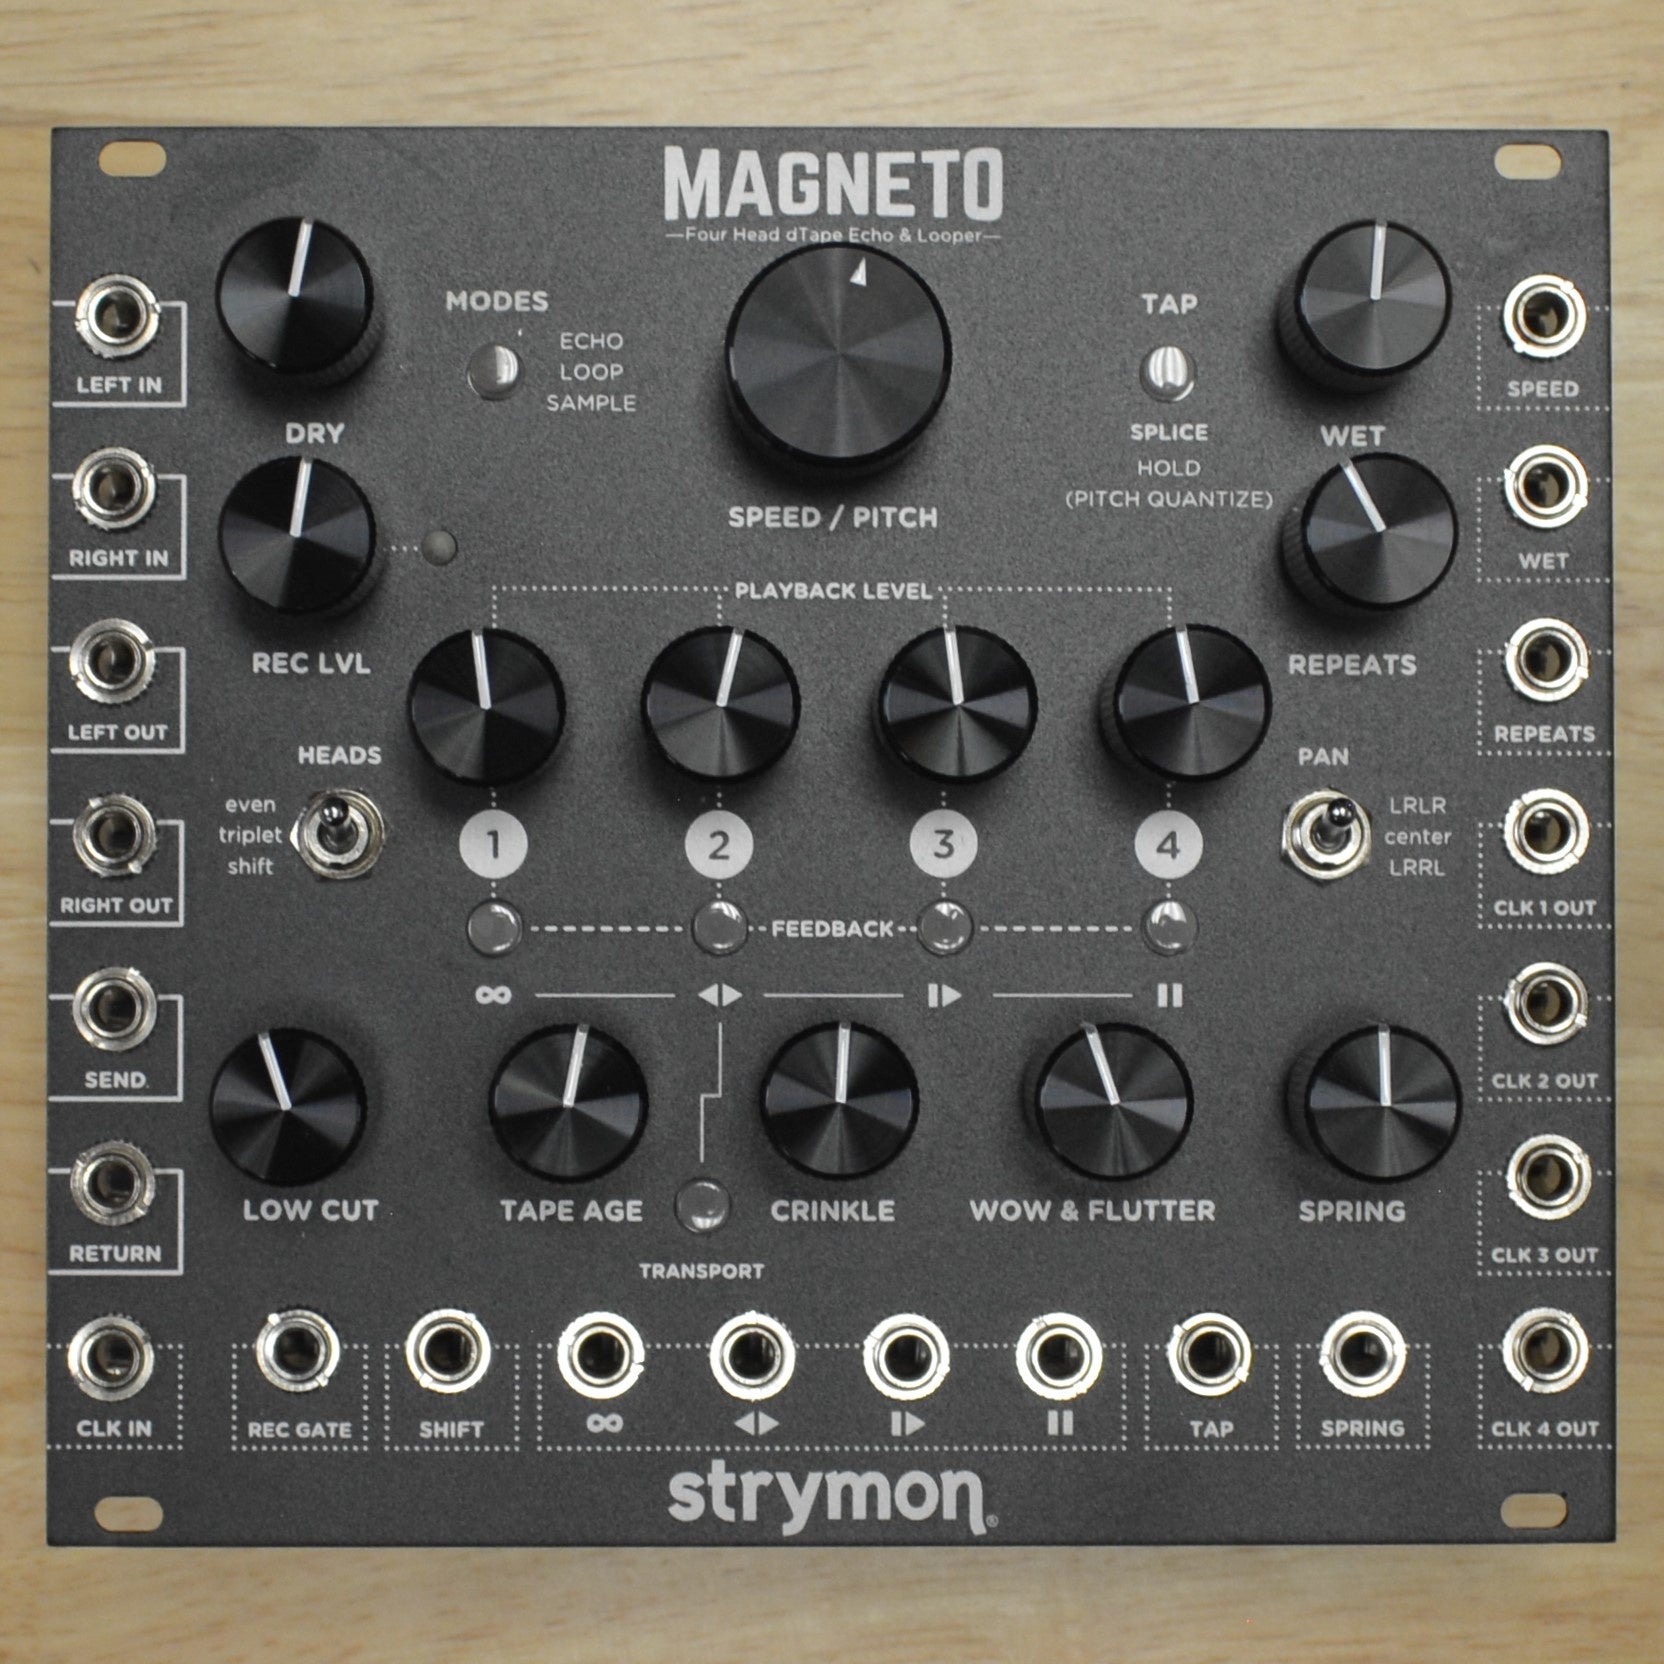 Strymon Magneto Four Head dTape Echo u0026 Looper